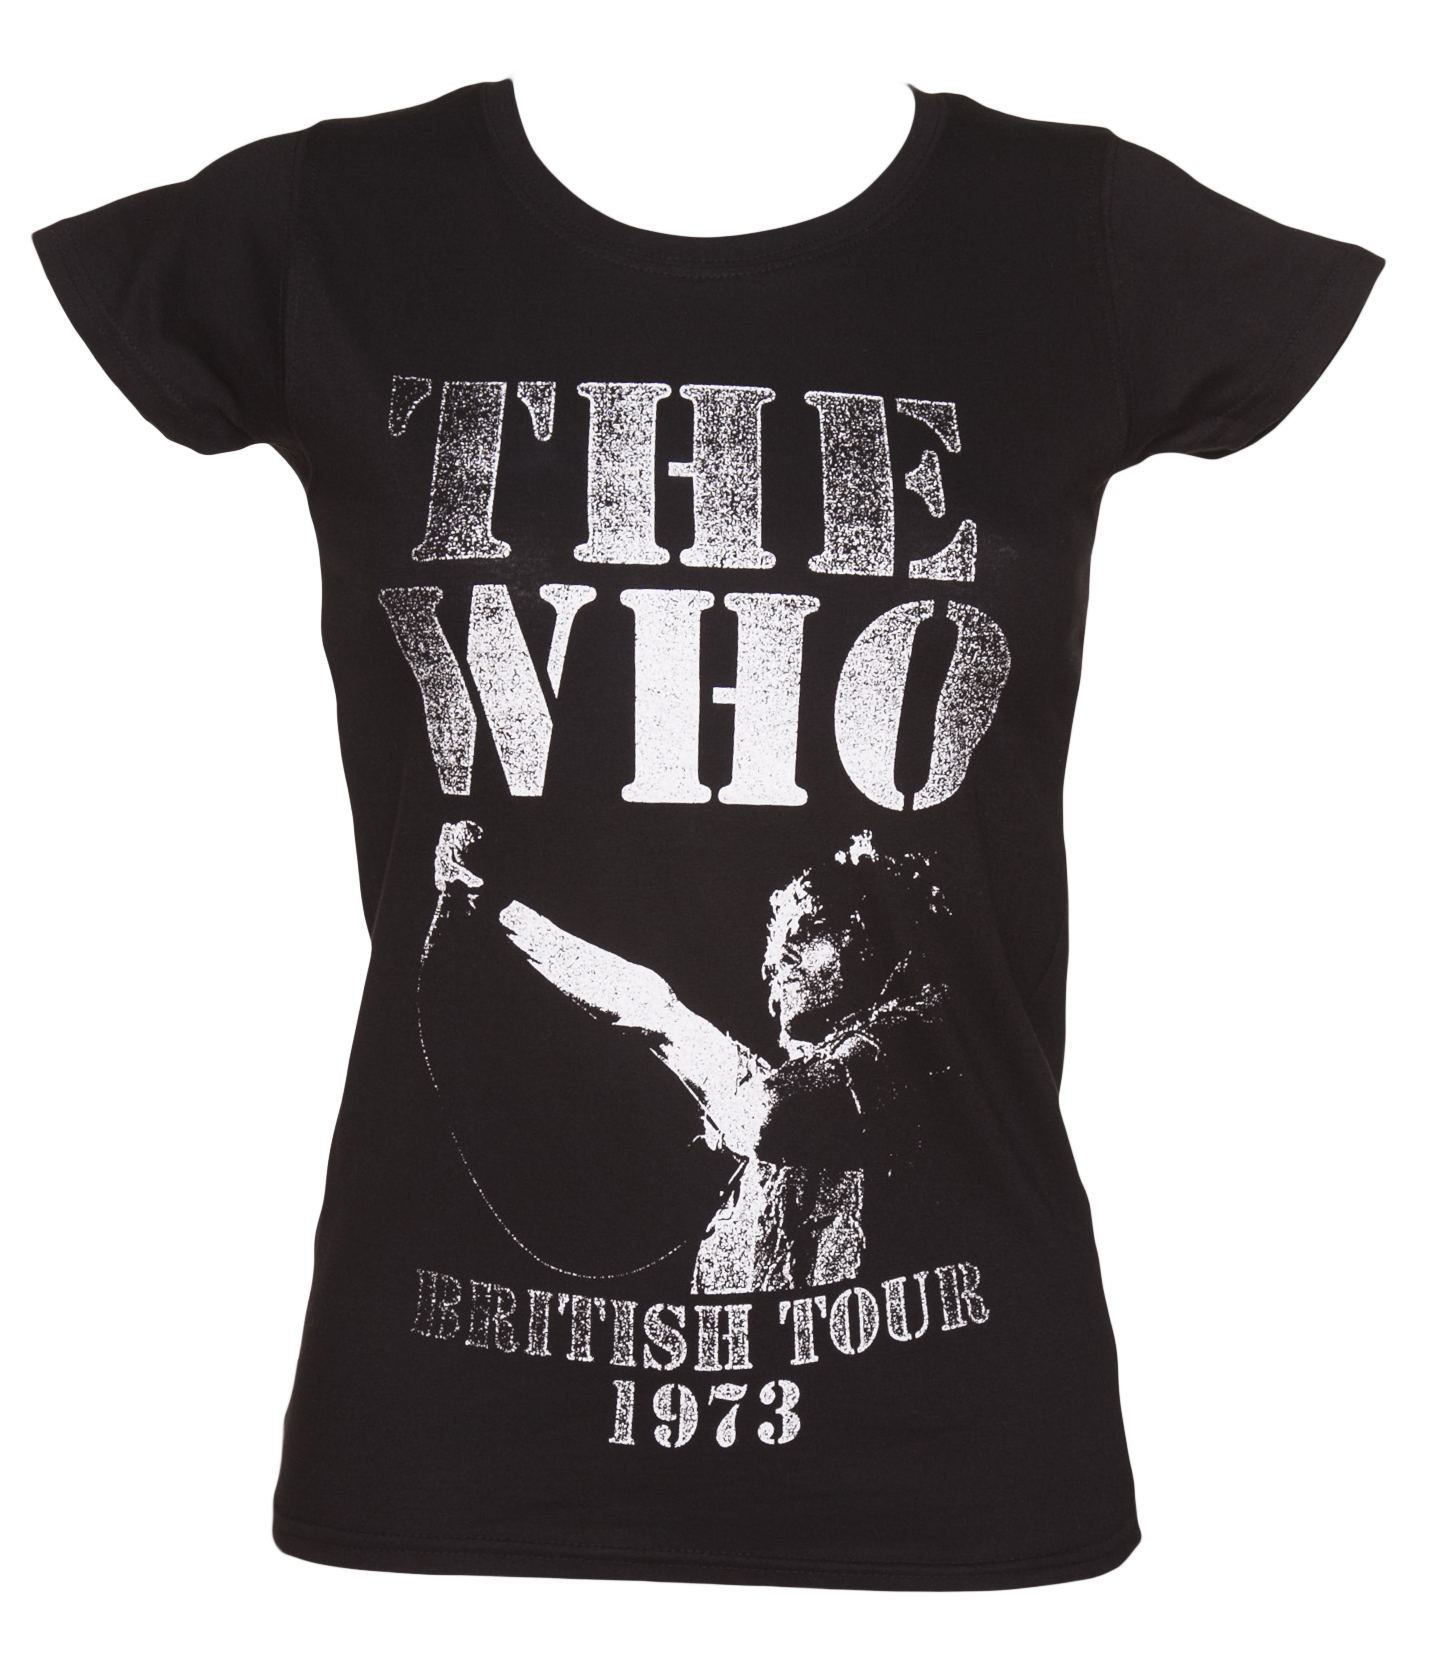 Ladies Black The Who British Tour 1973 T-Shirt